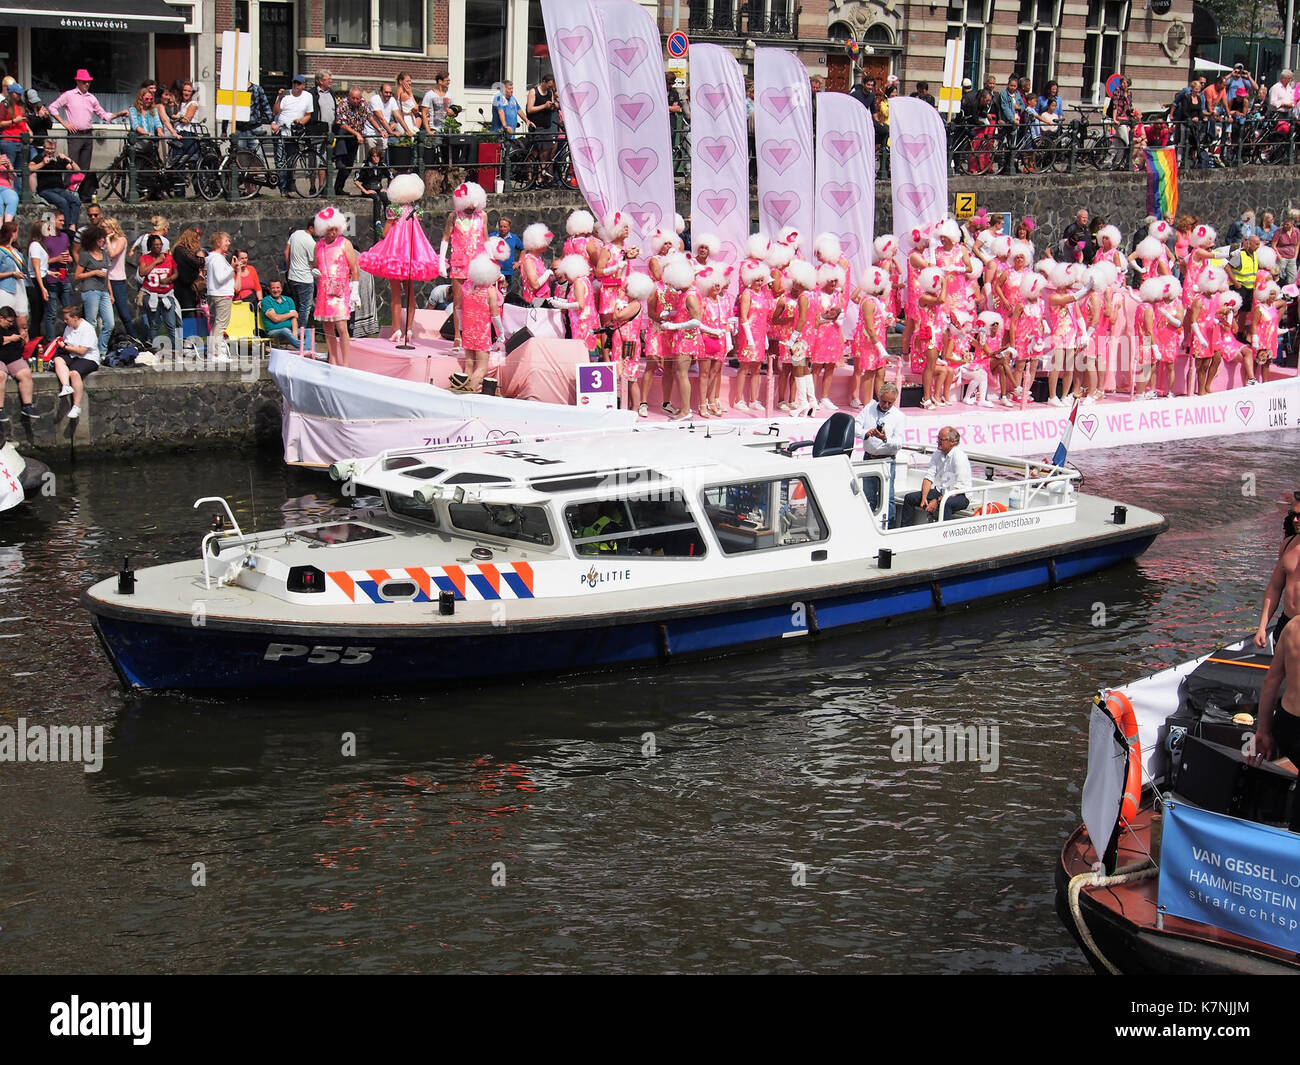 P55 Politie, Canal Parade Amsterdam 2017 Foto 1 Foto de stock